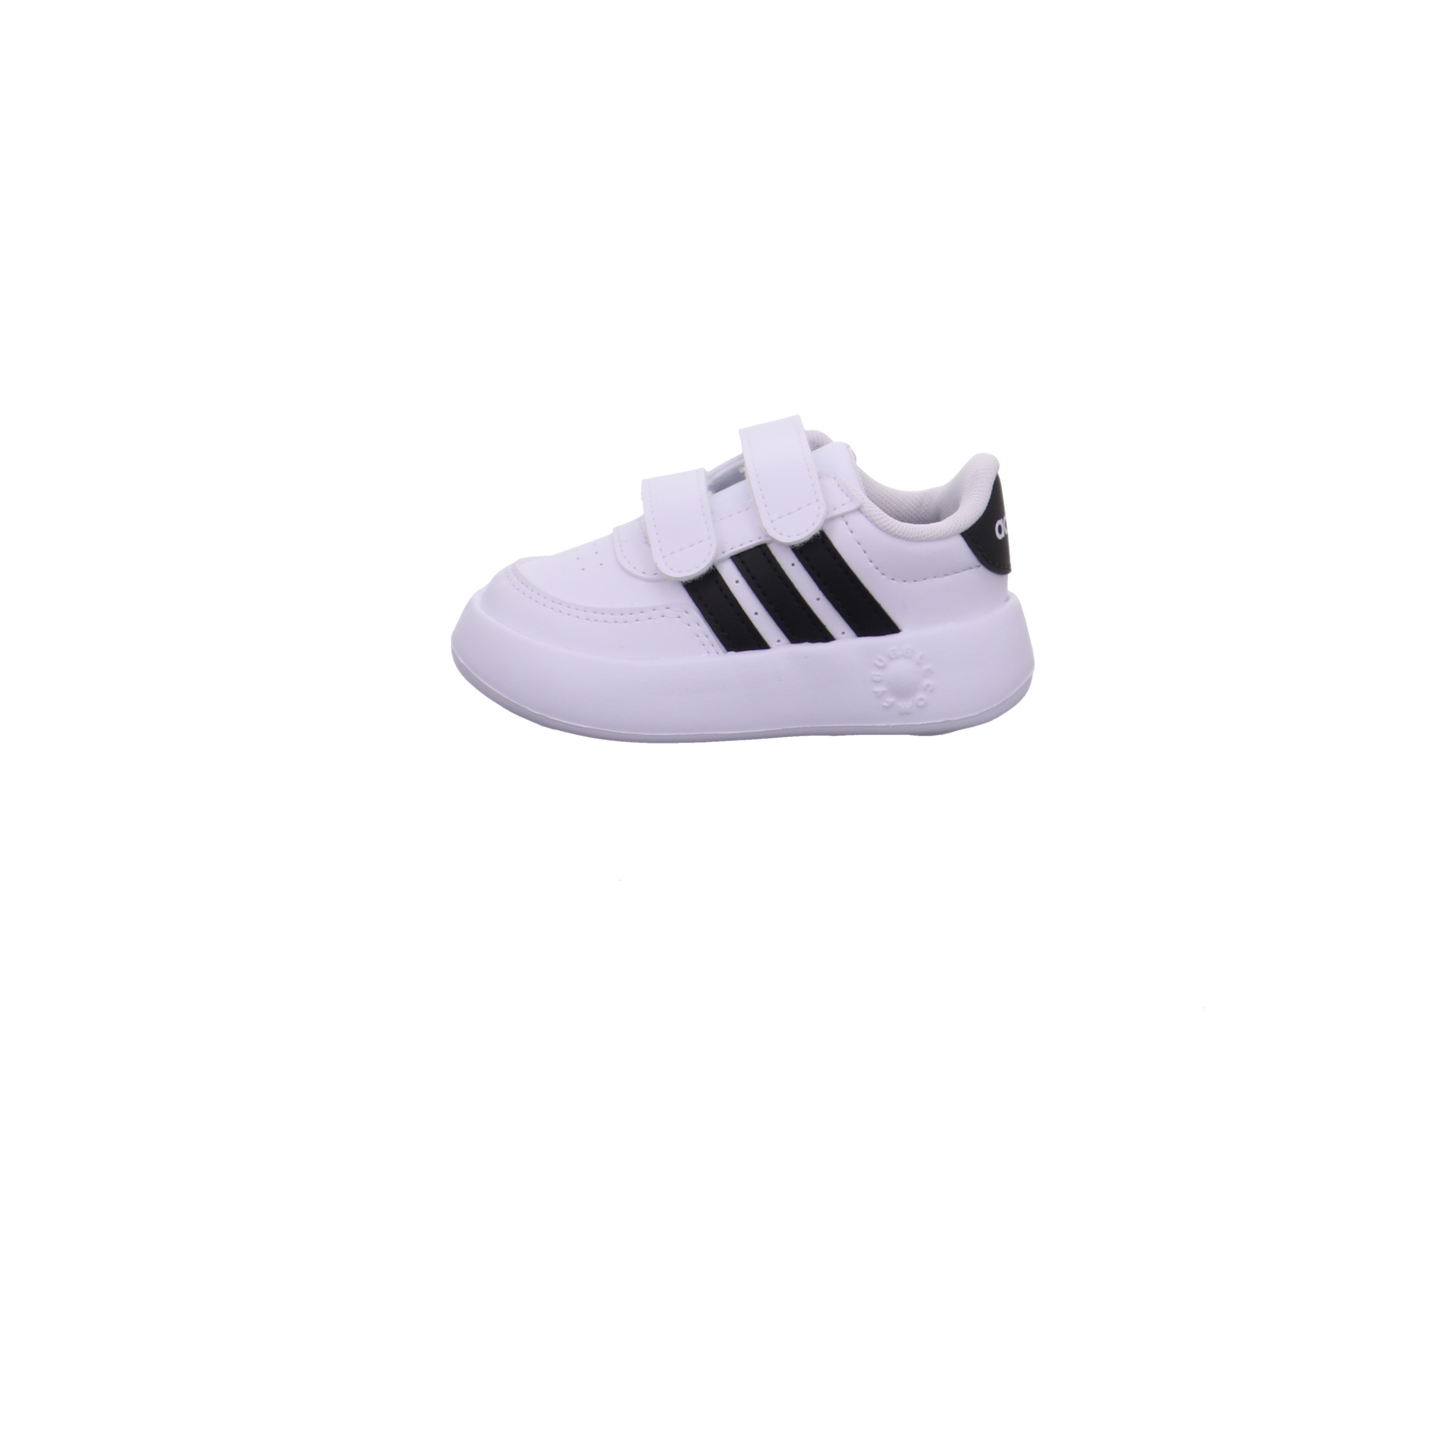 Adidas BREAKNET 2.0 CF I weiß-schwarz Bild1